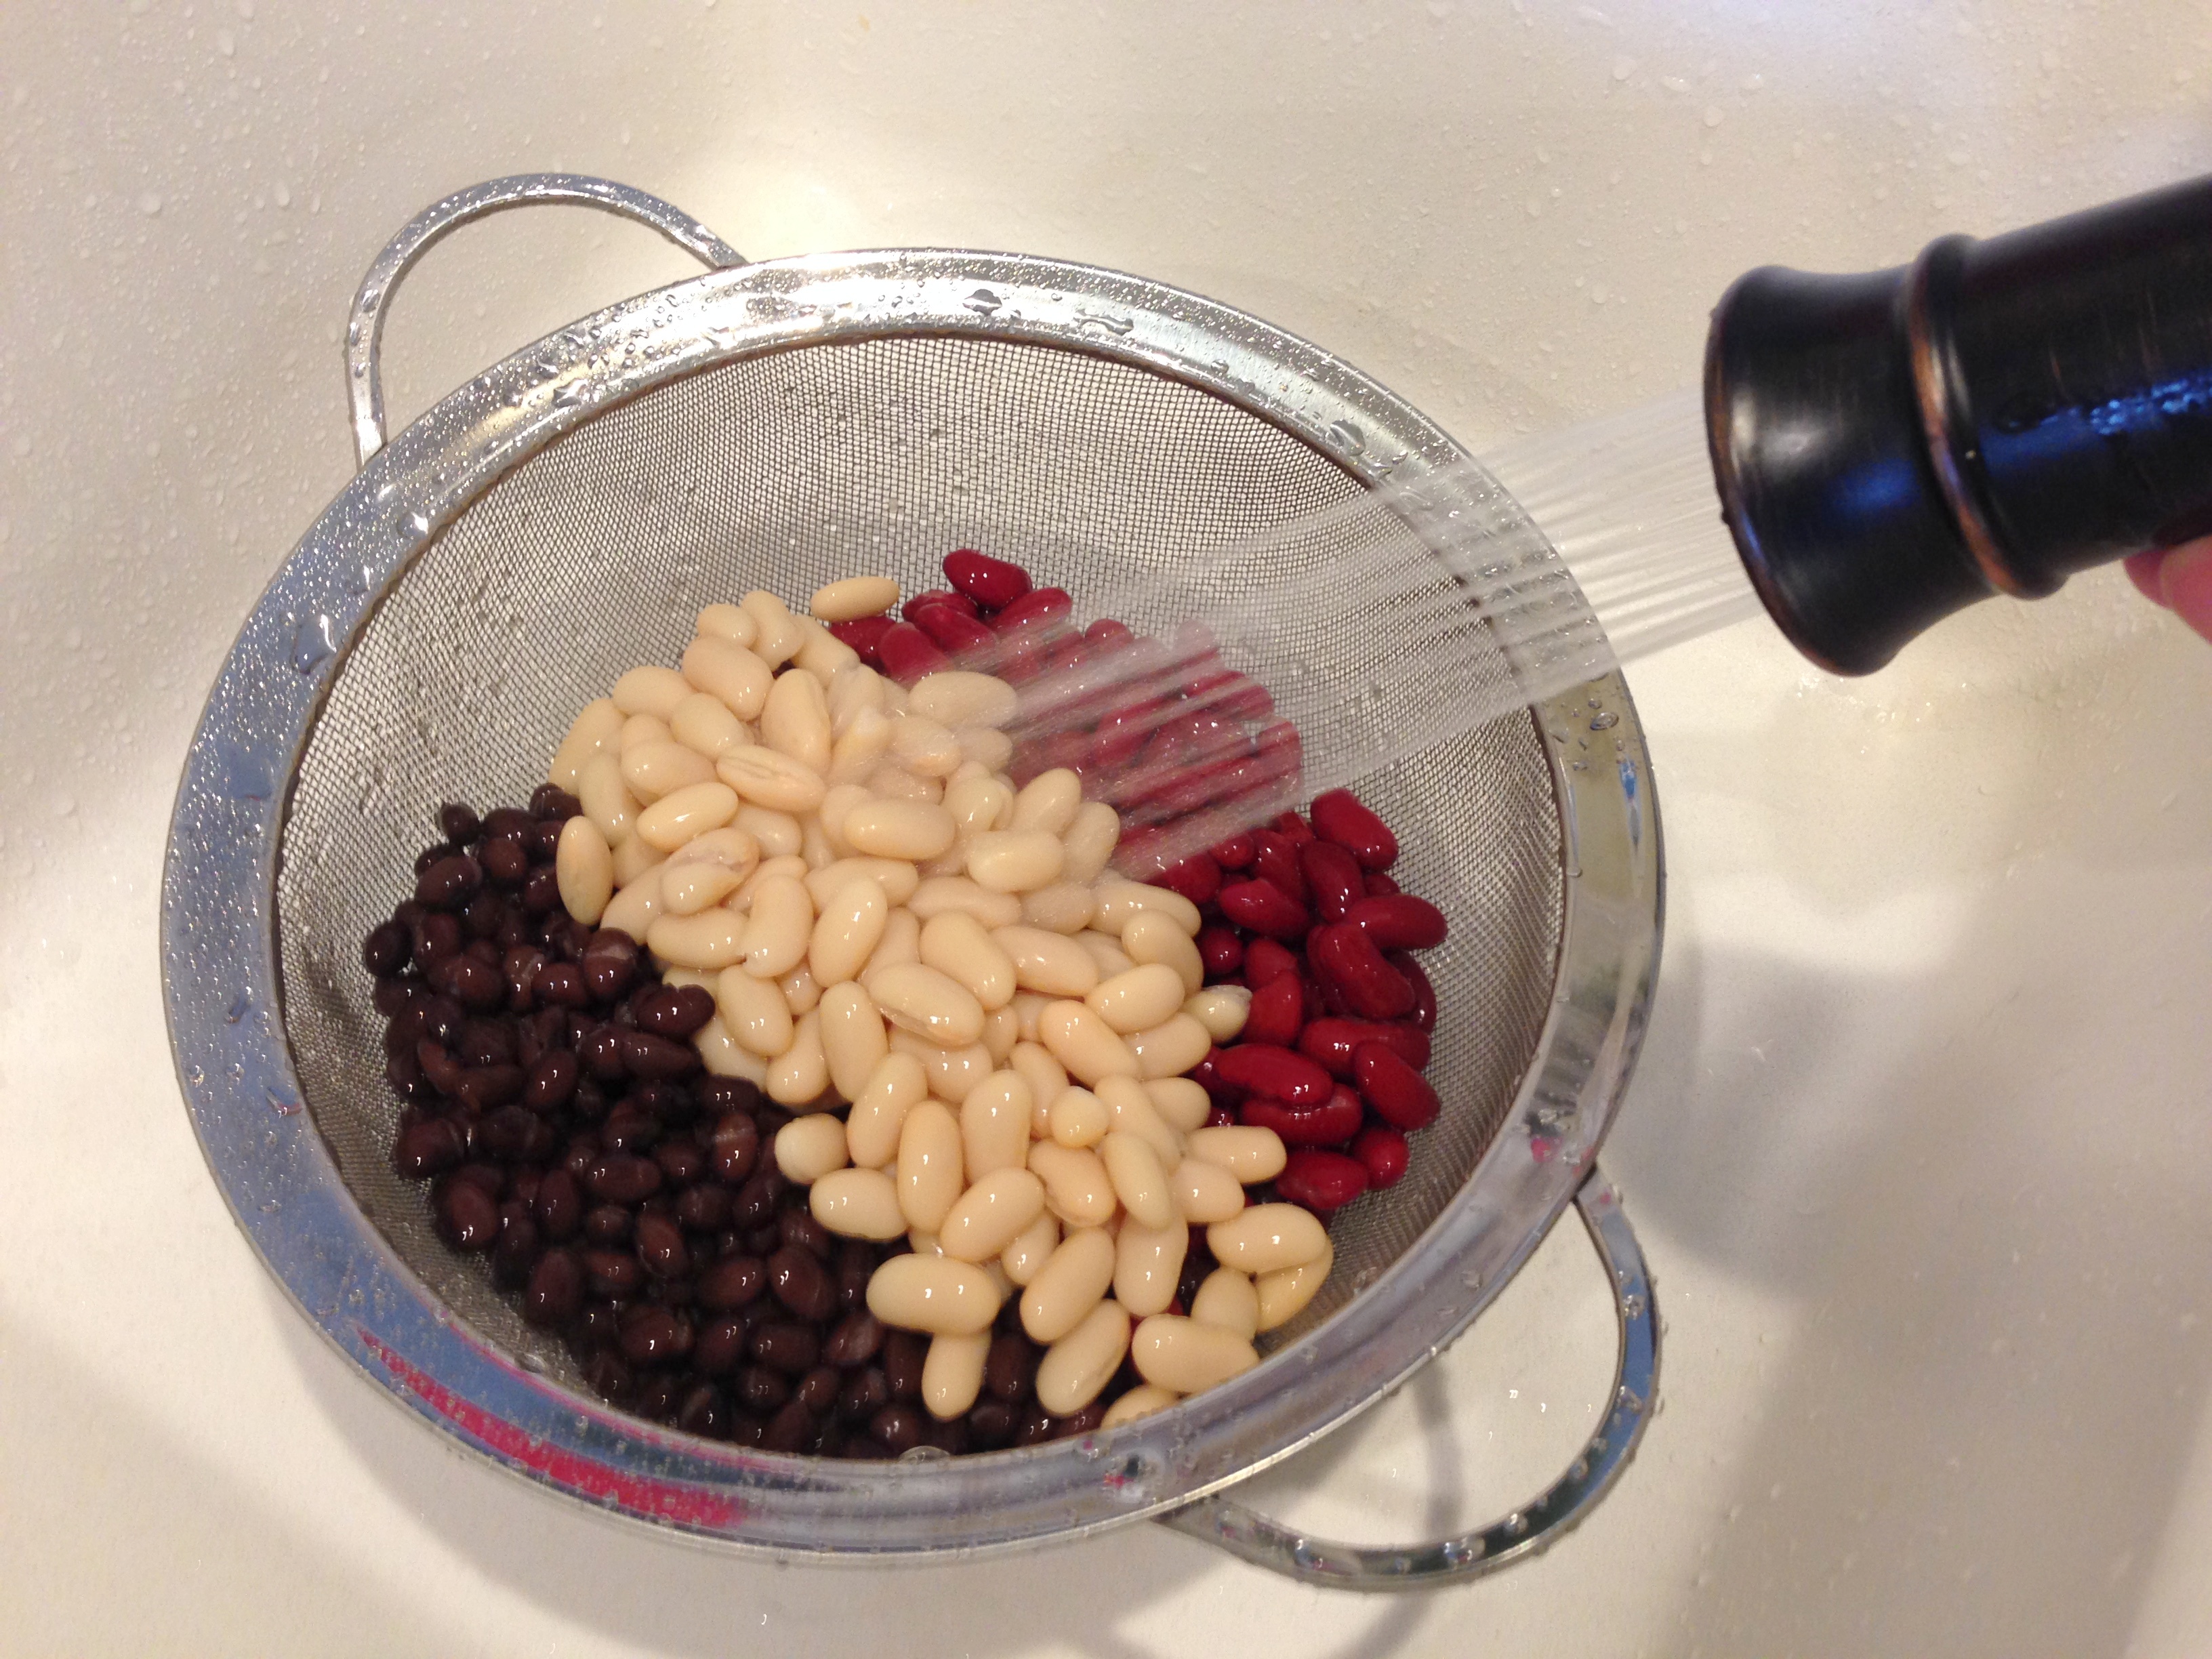 Rinse beans